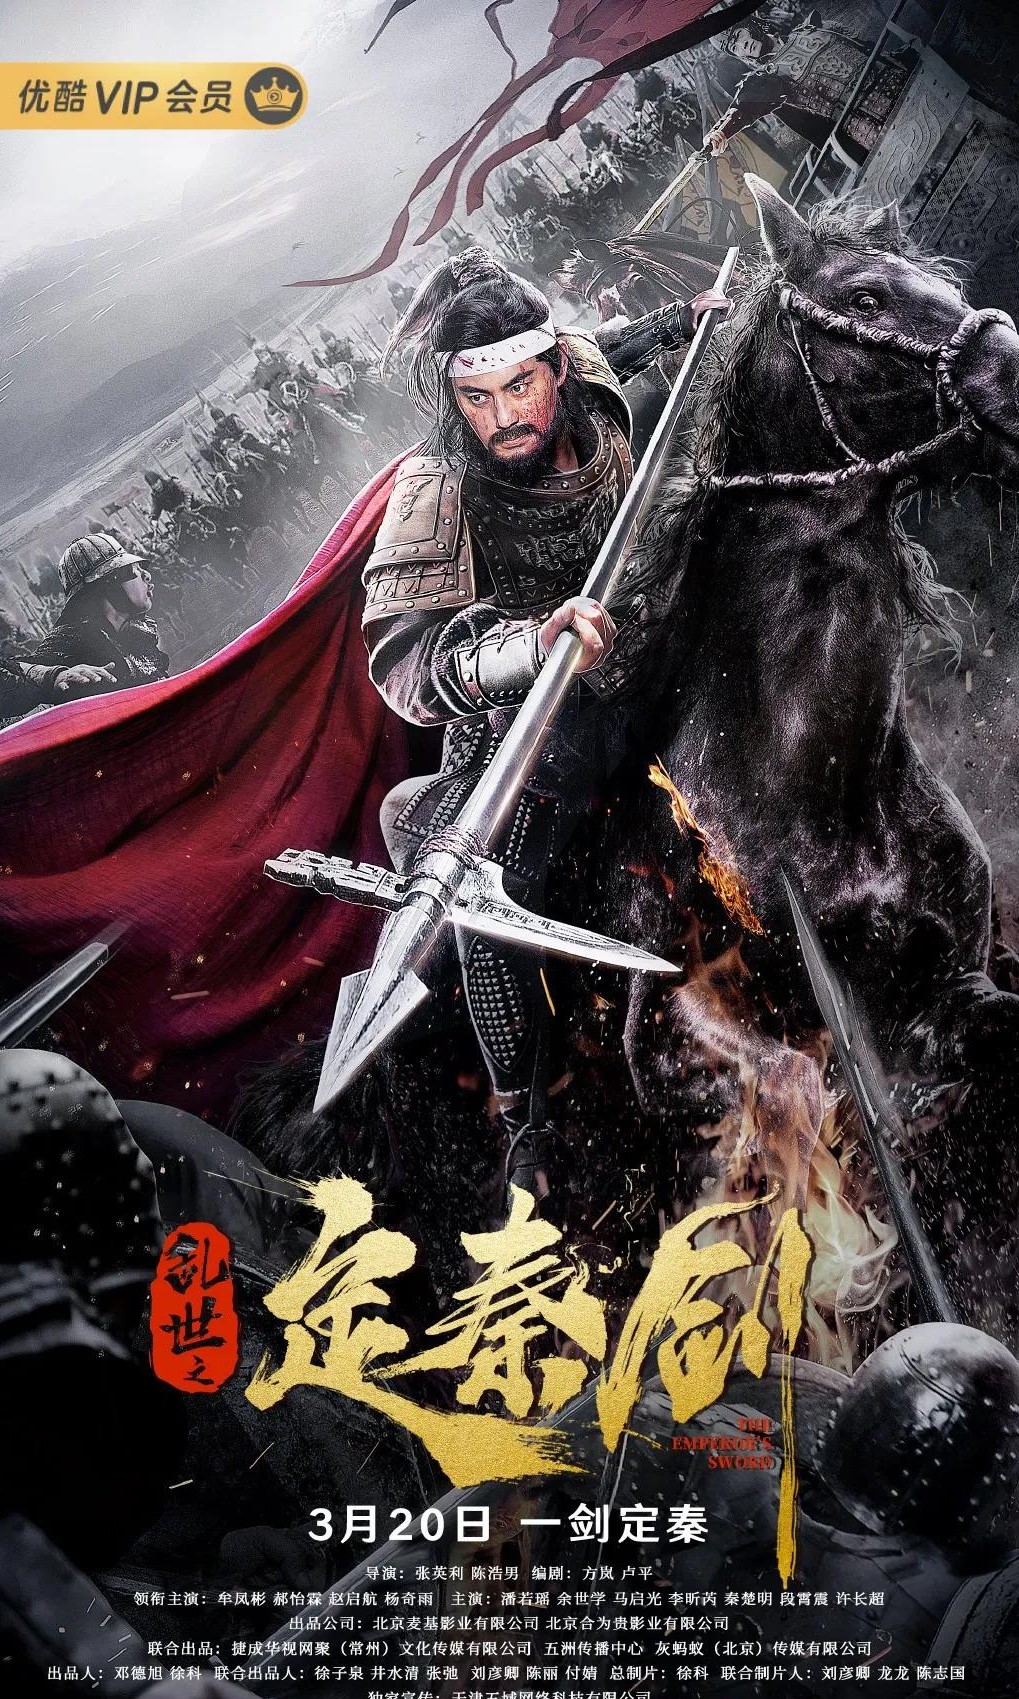 The Emperor's Sword (2020)